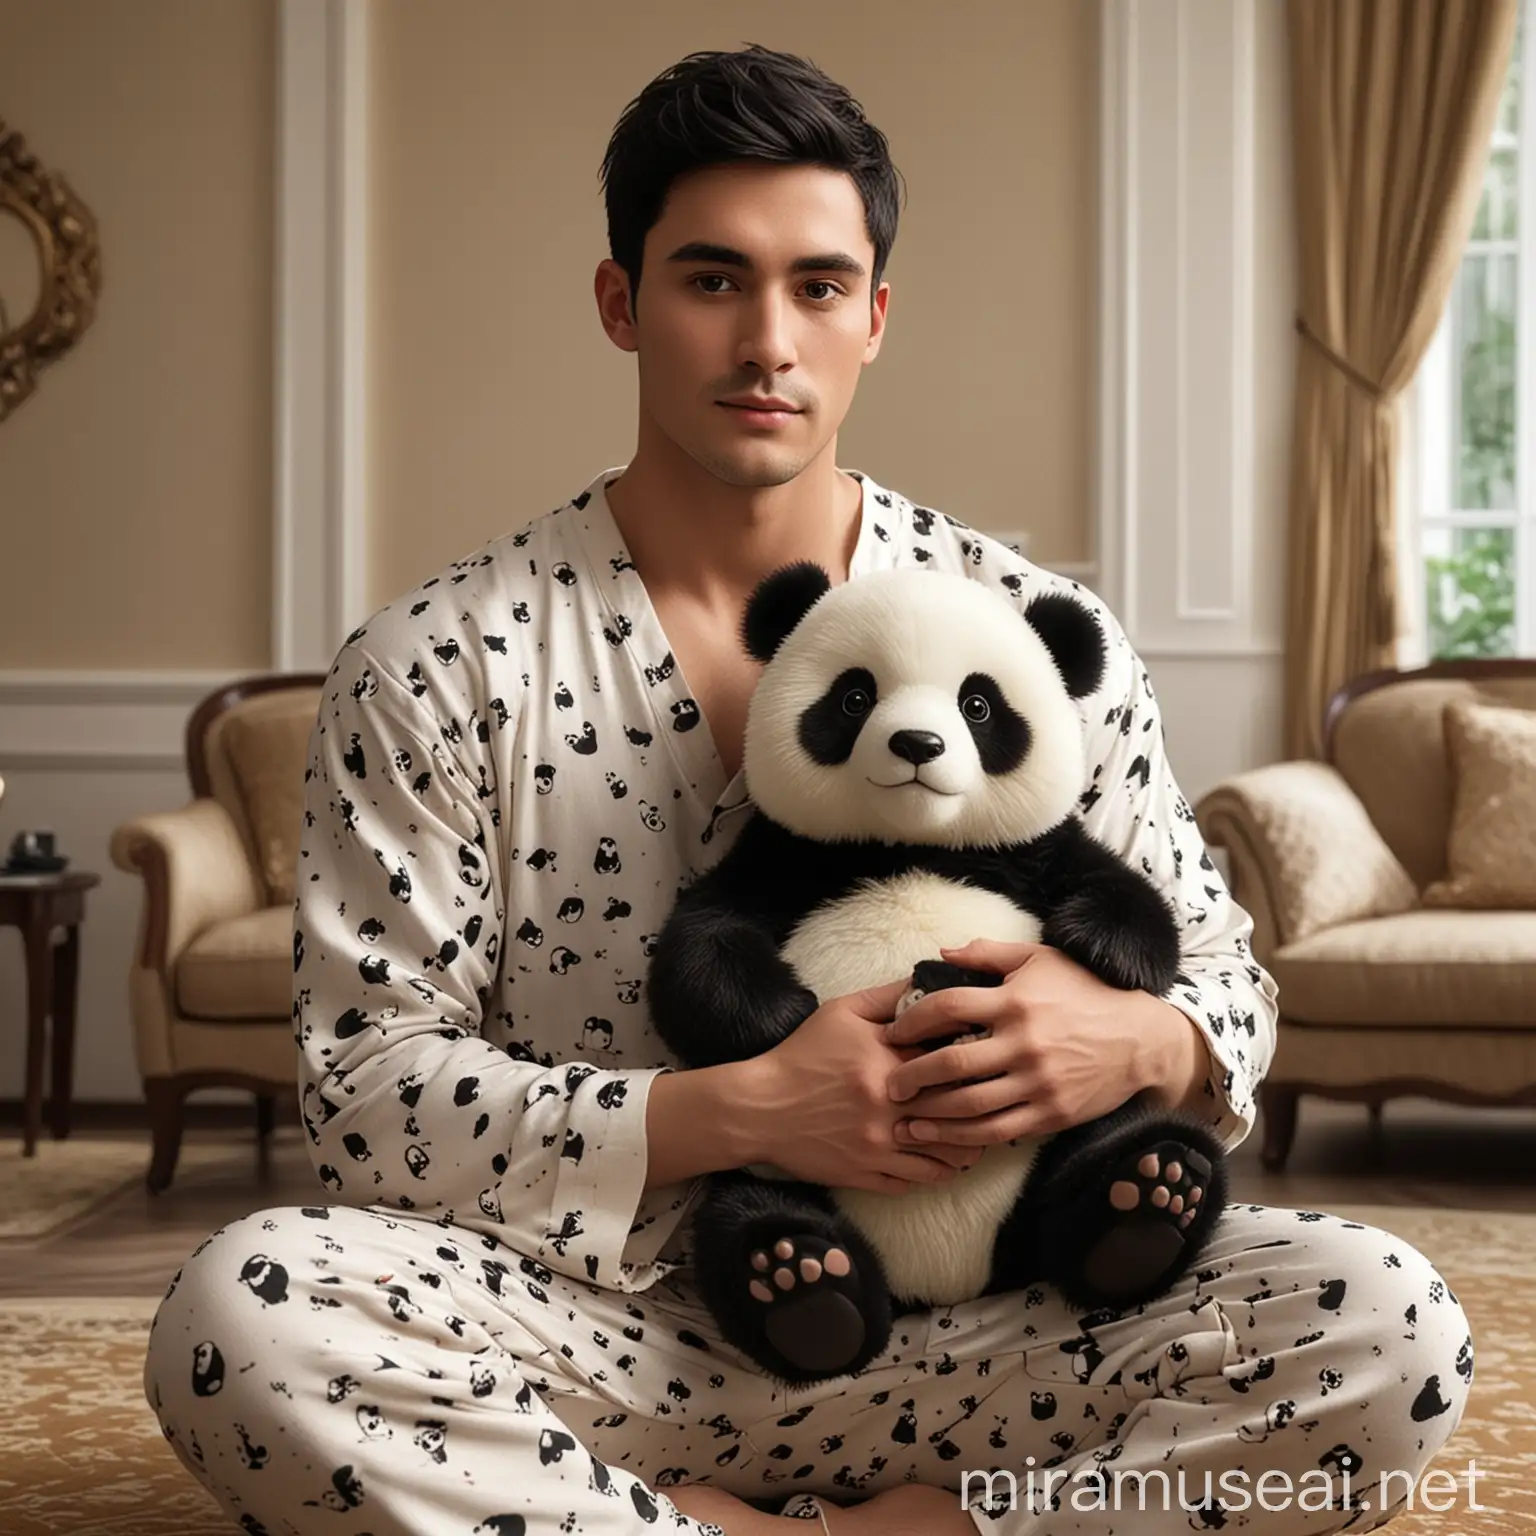 Stylish Young Man in Panda Pajamas with Plush Companion